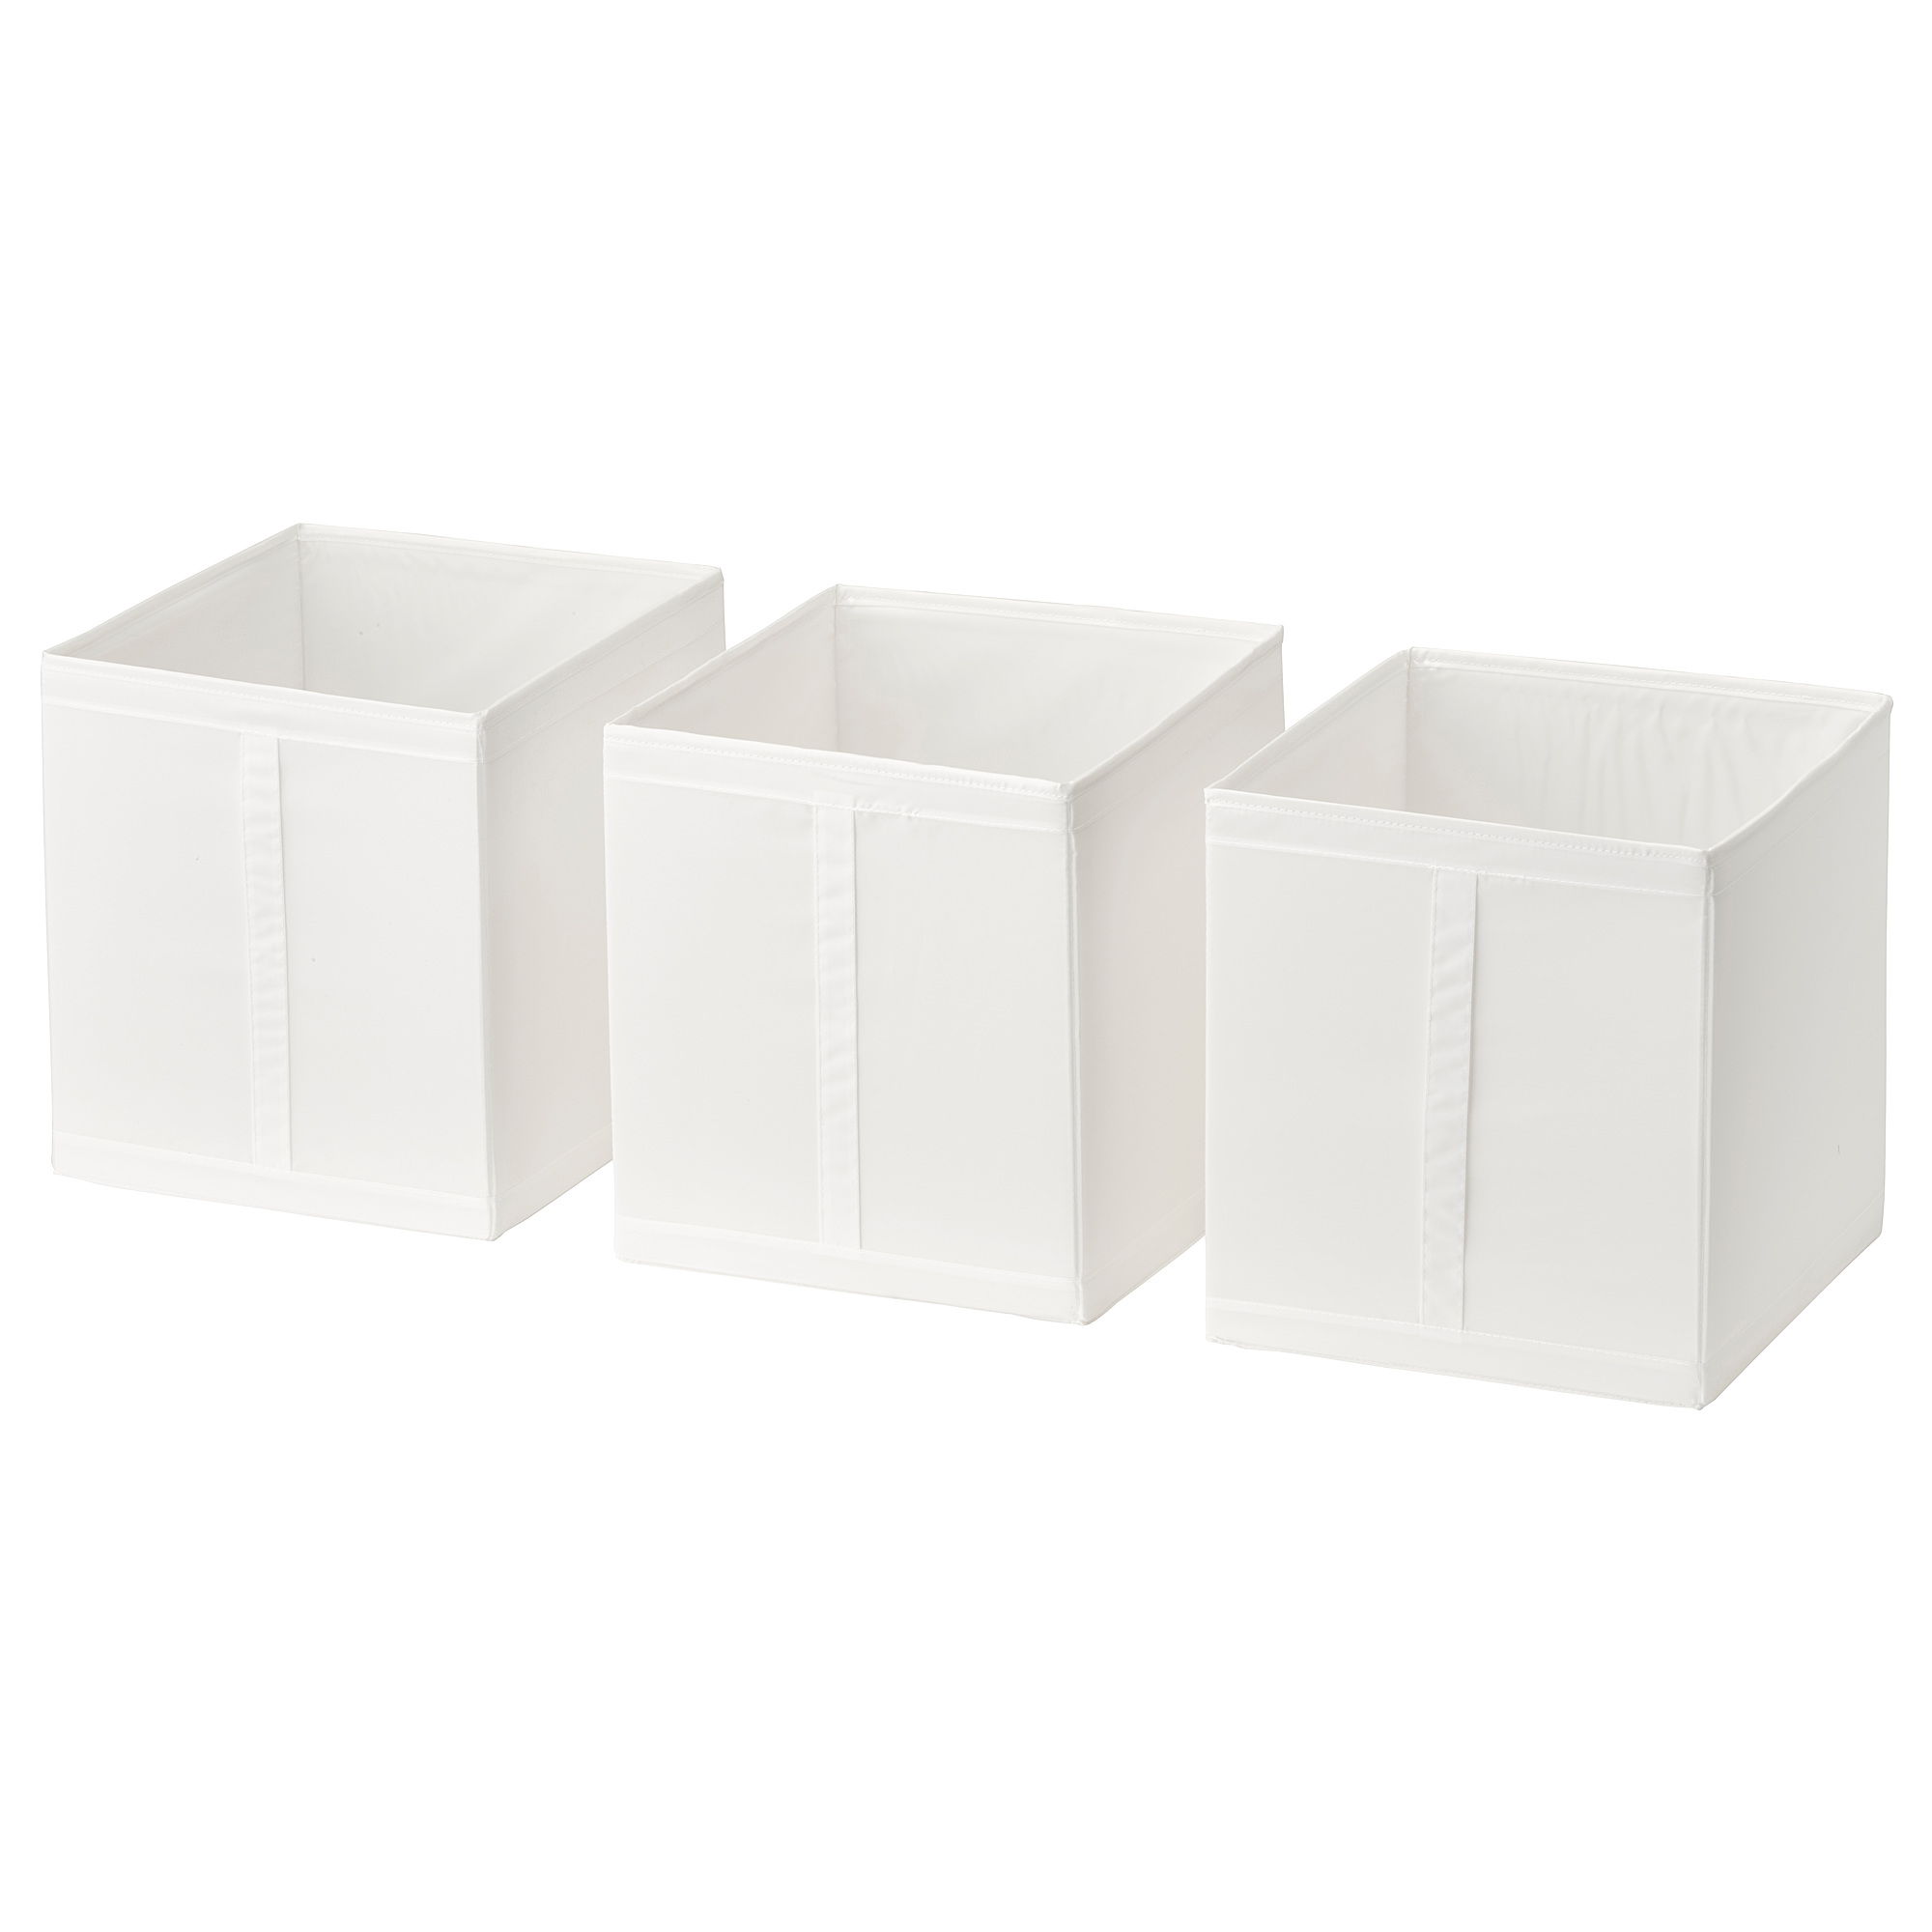 SKUBB - 盒, 白色, 31x34x33 厘米| IKEA 香港及澳門